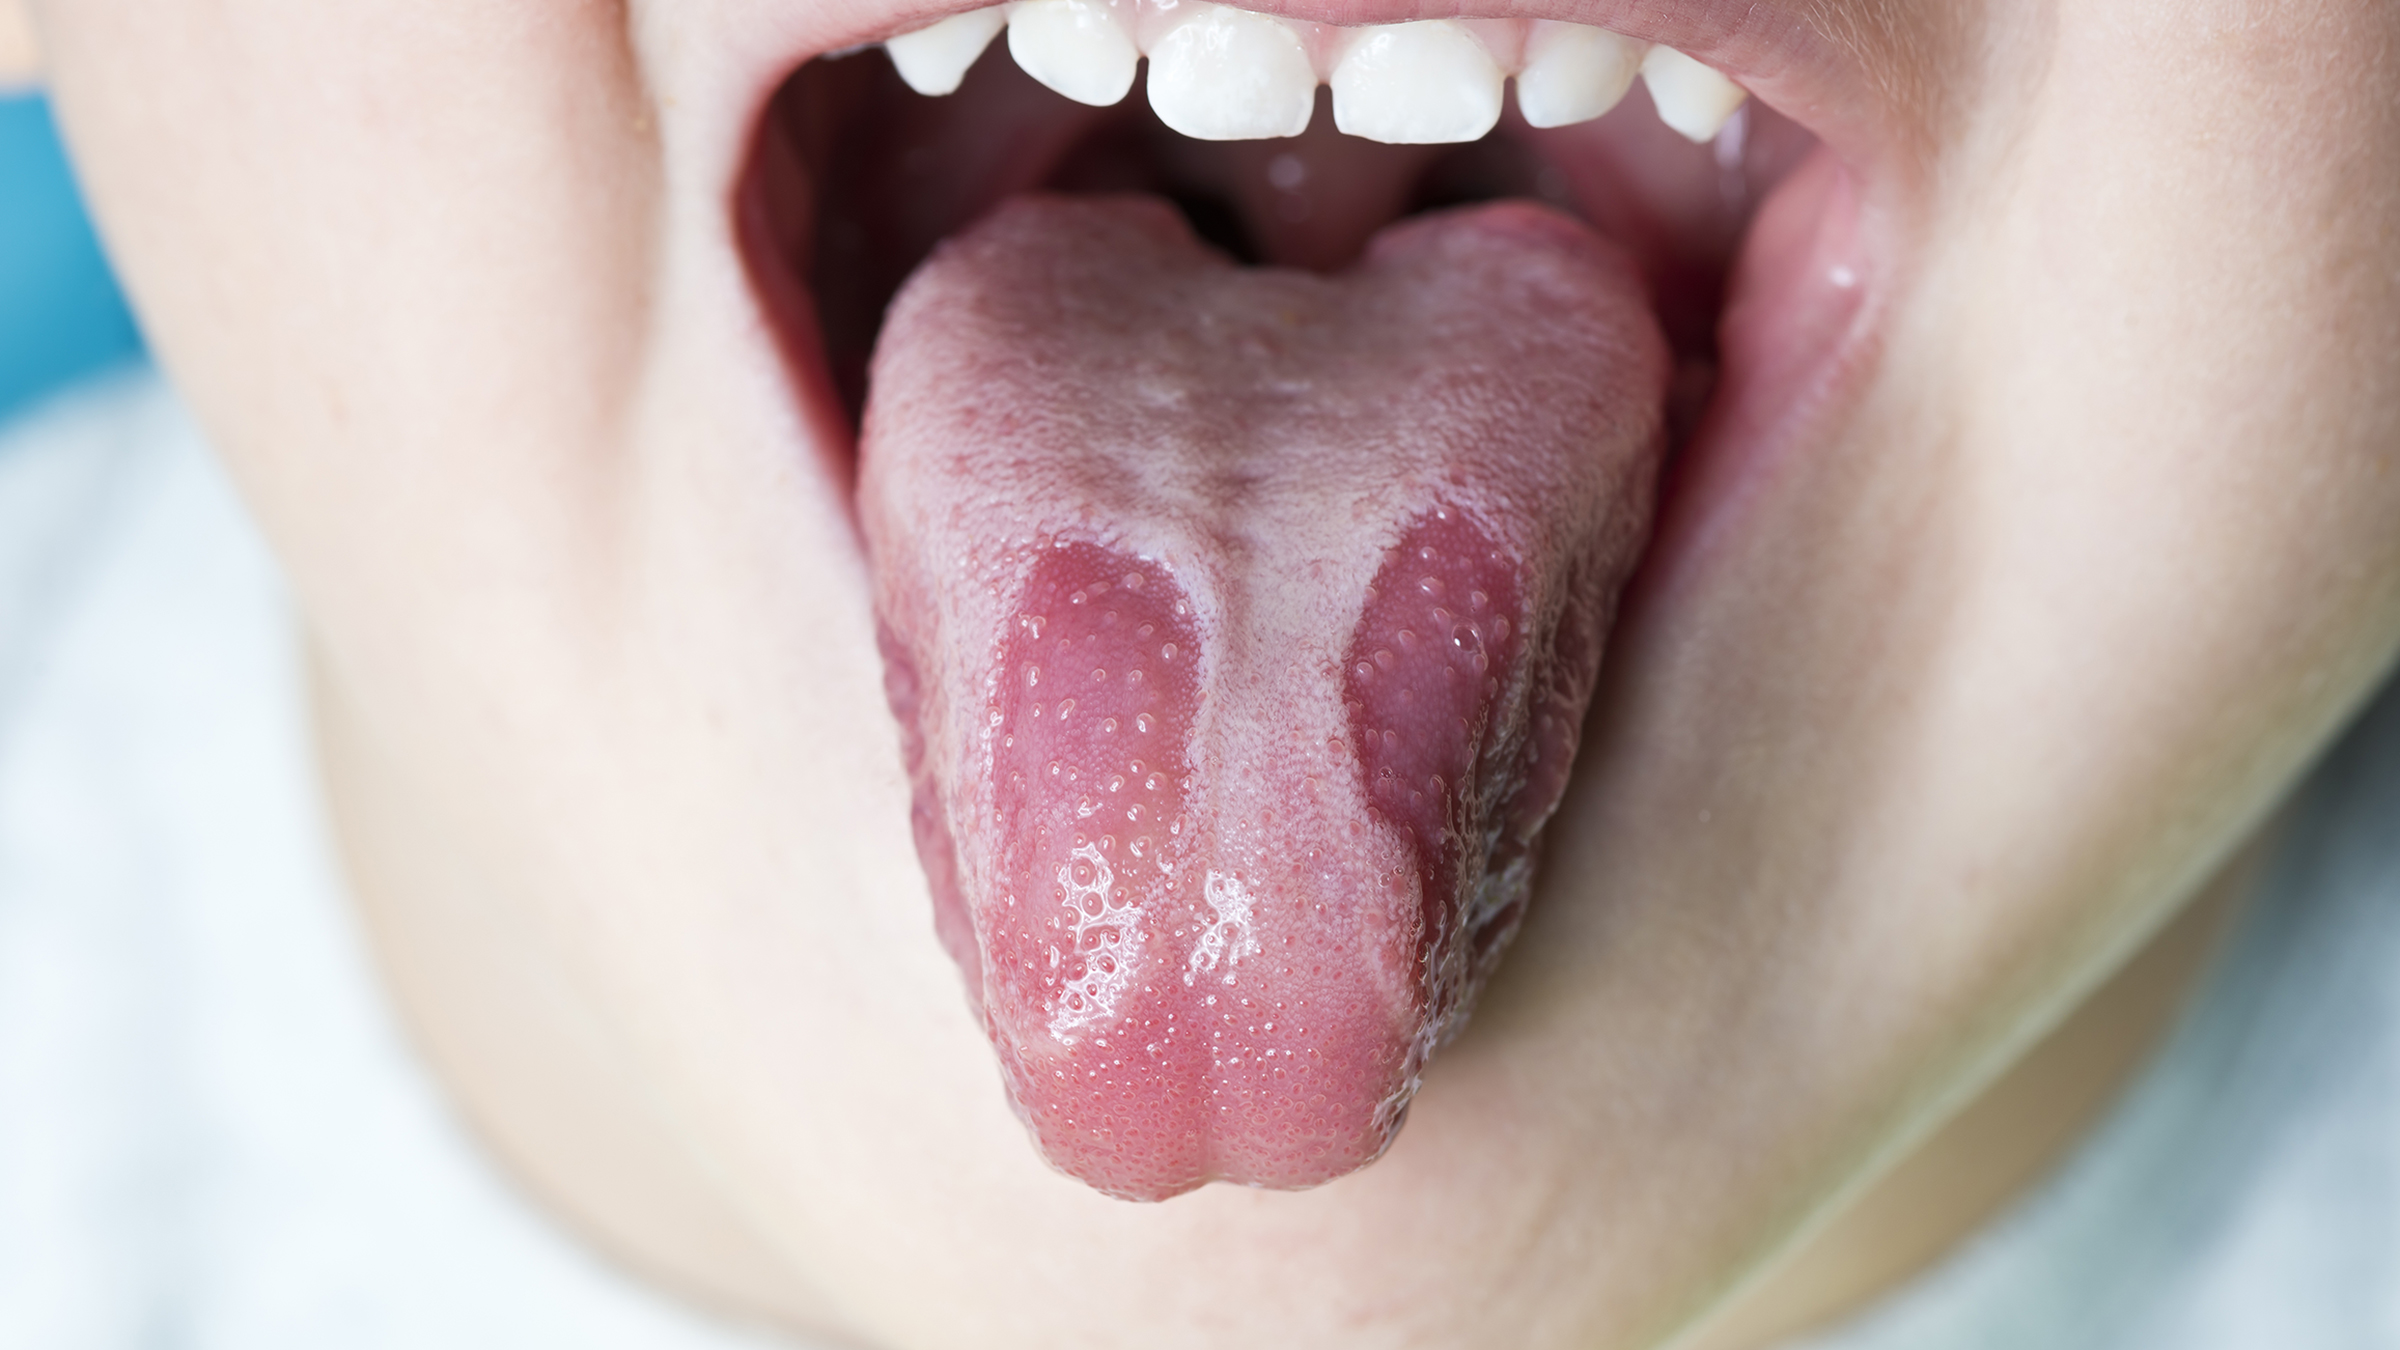 fever blister on tongue